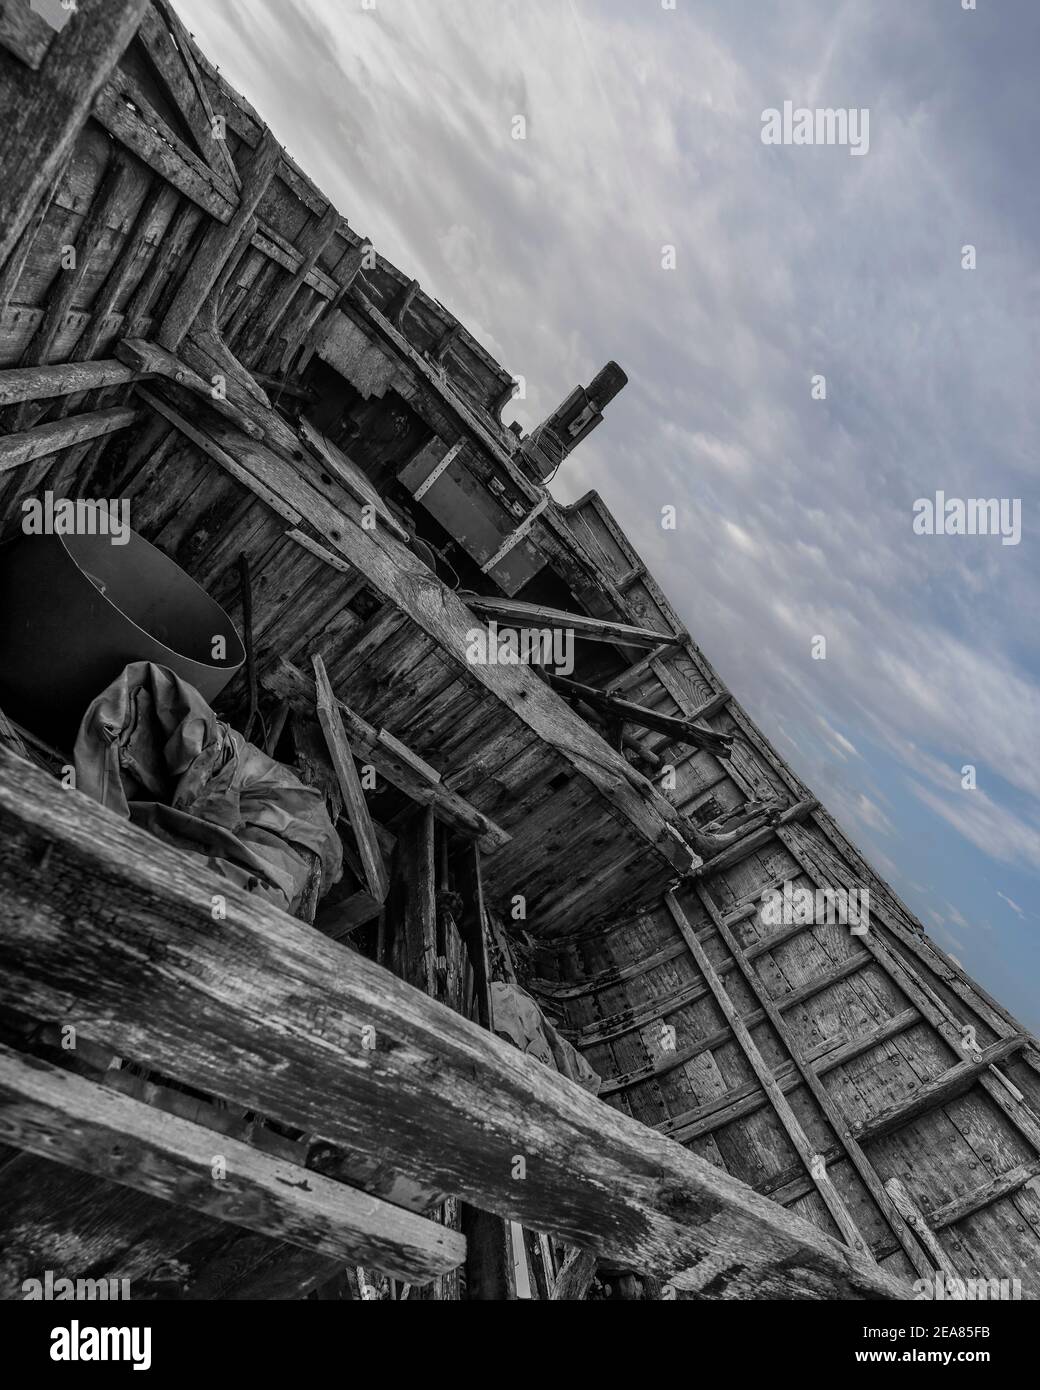 Derelict Boat Stock Photo